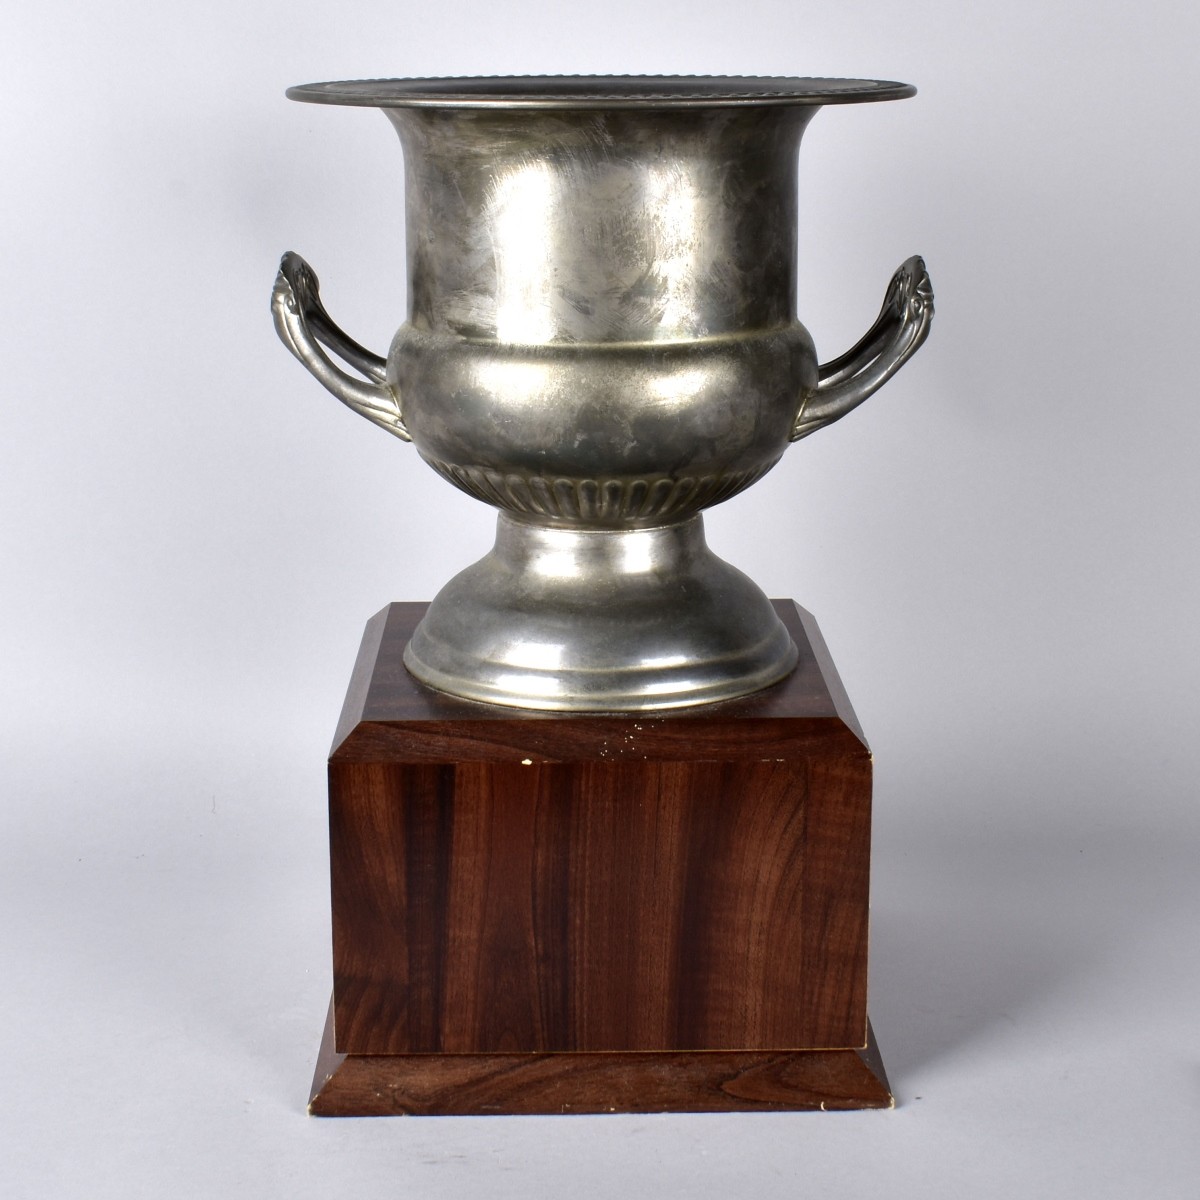 2001 - 2003 Silver Plate Golf Trophy